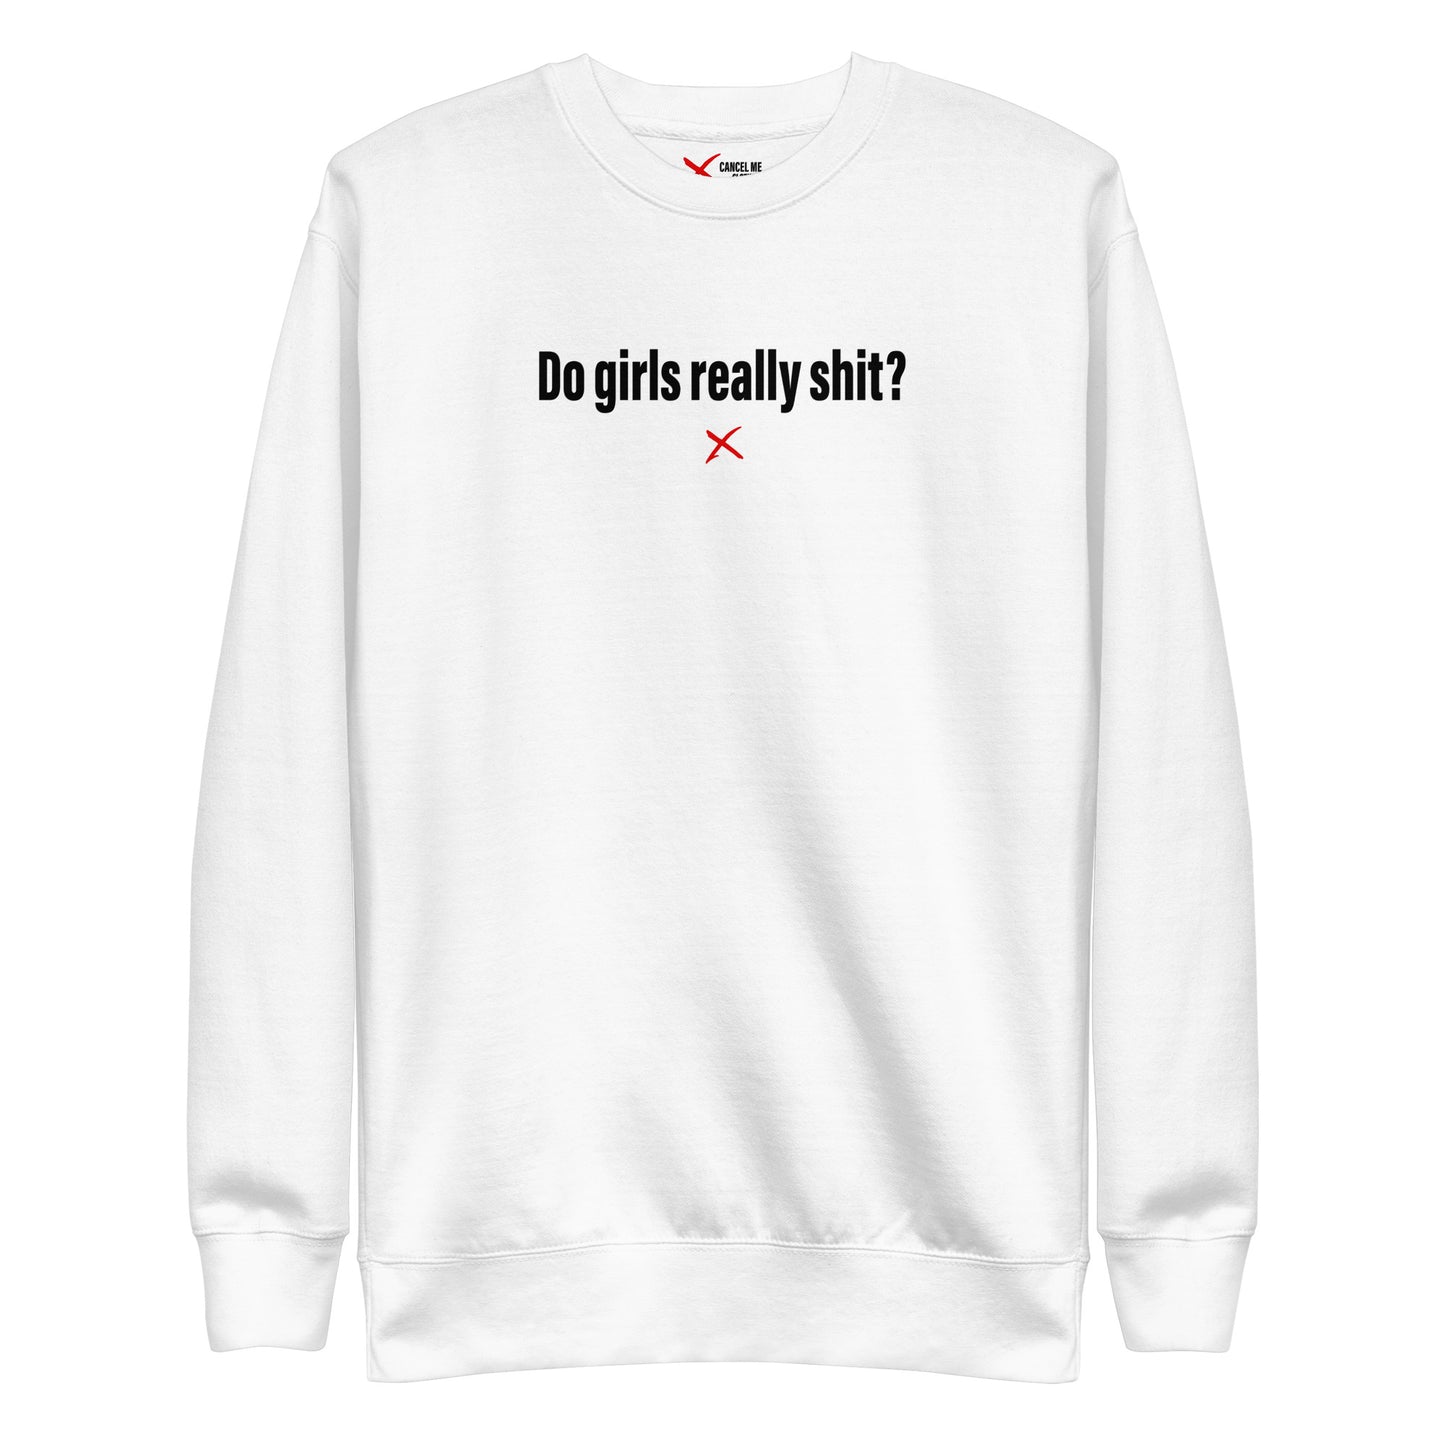 Do girls really shit? - Sweatshirt